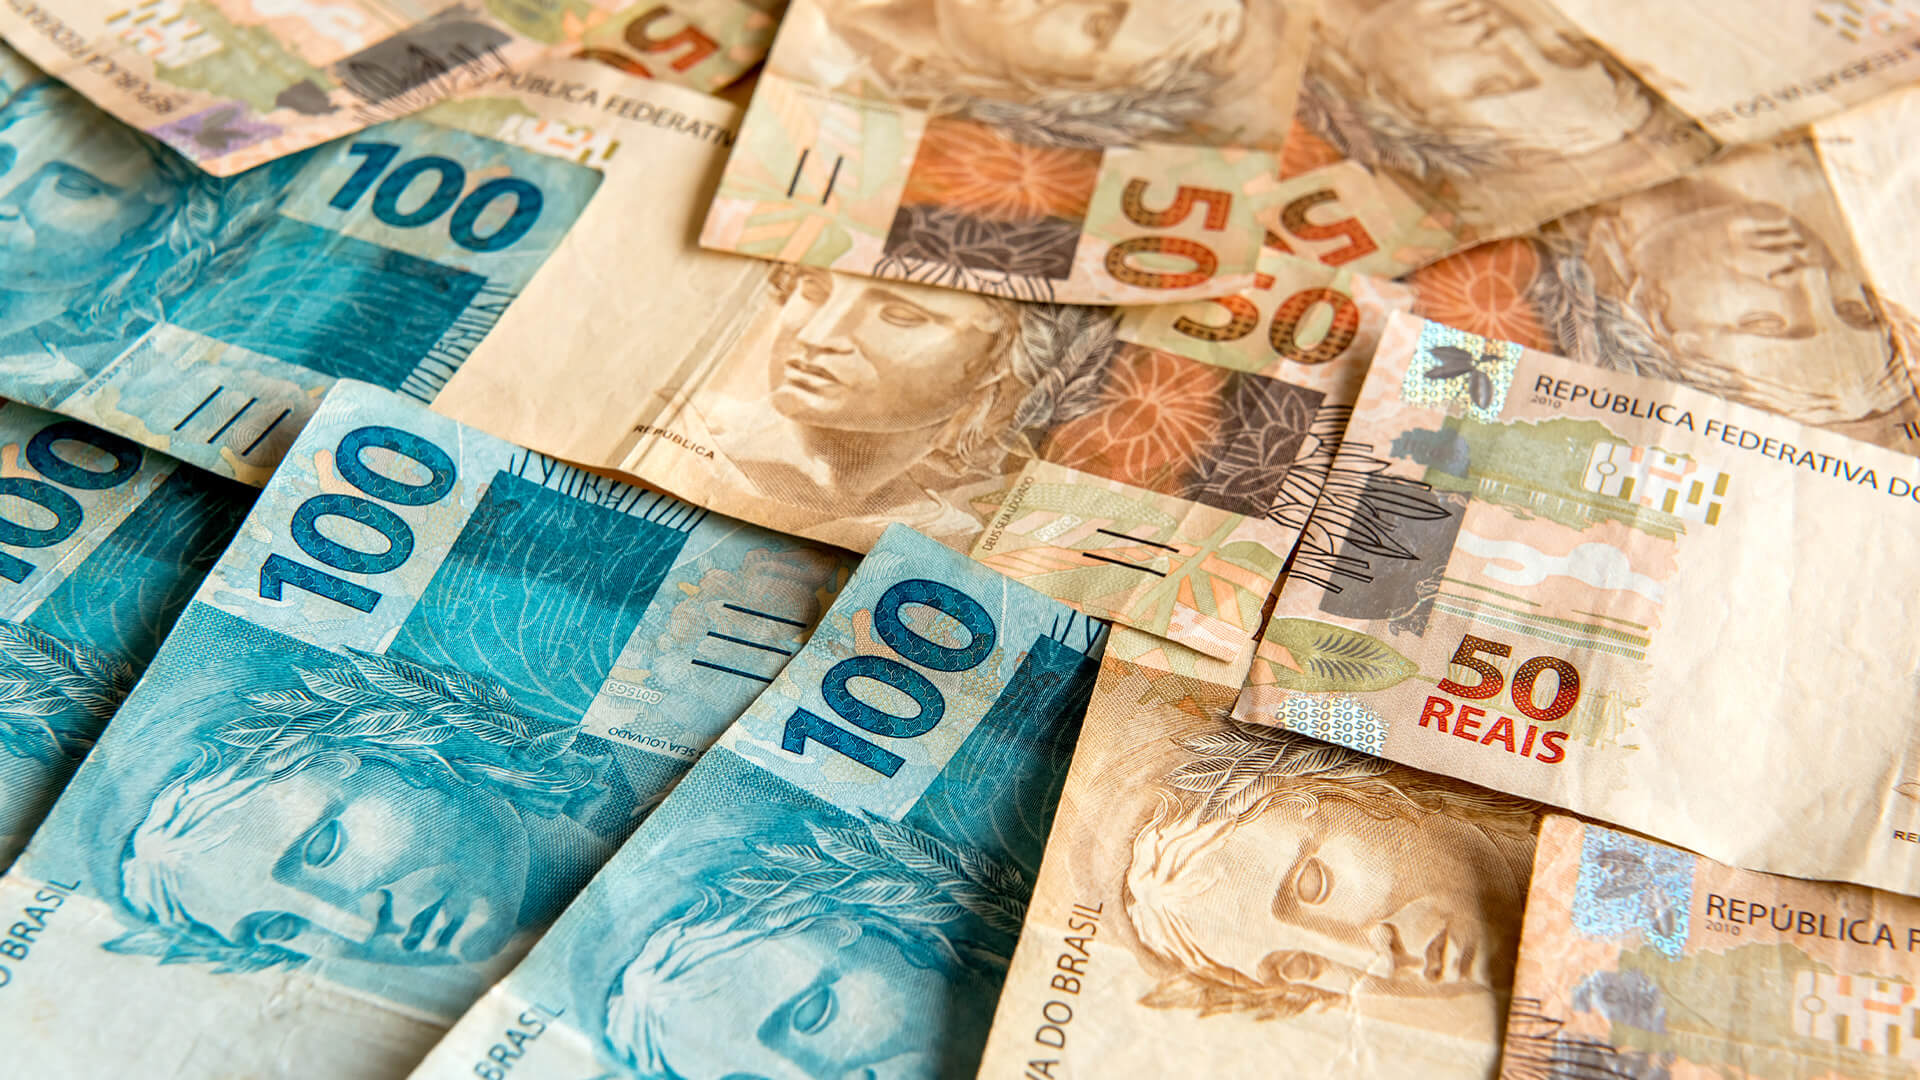 Brazilian real money notes